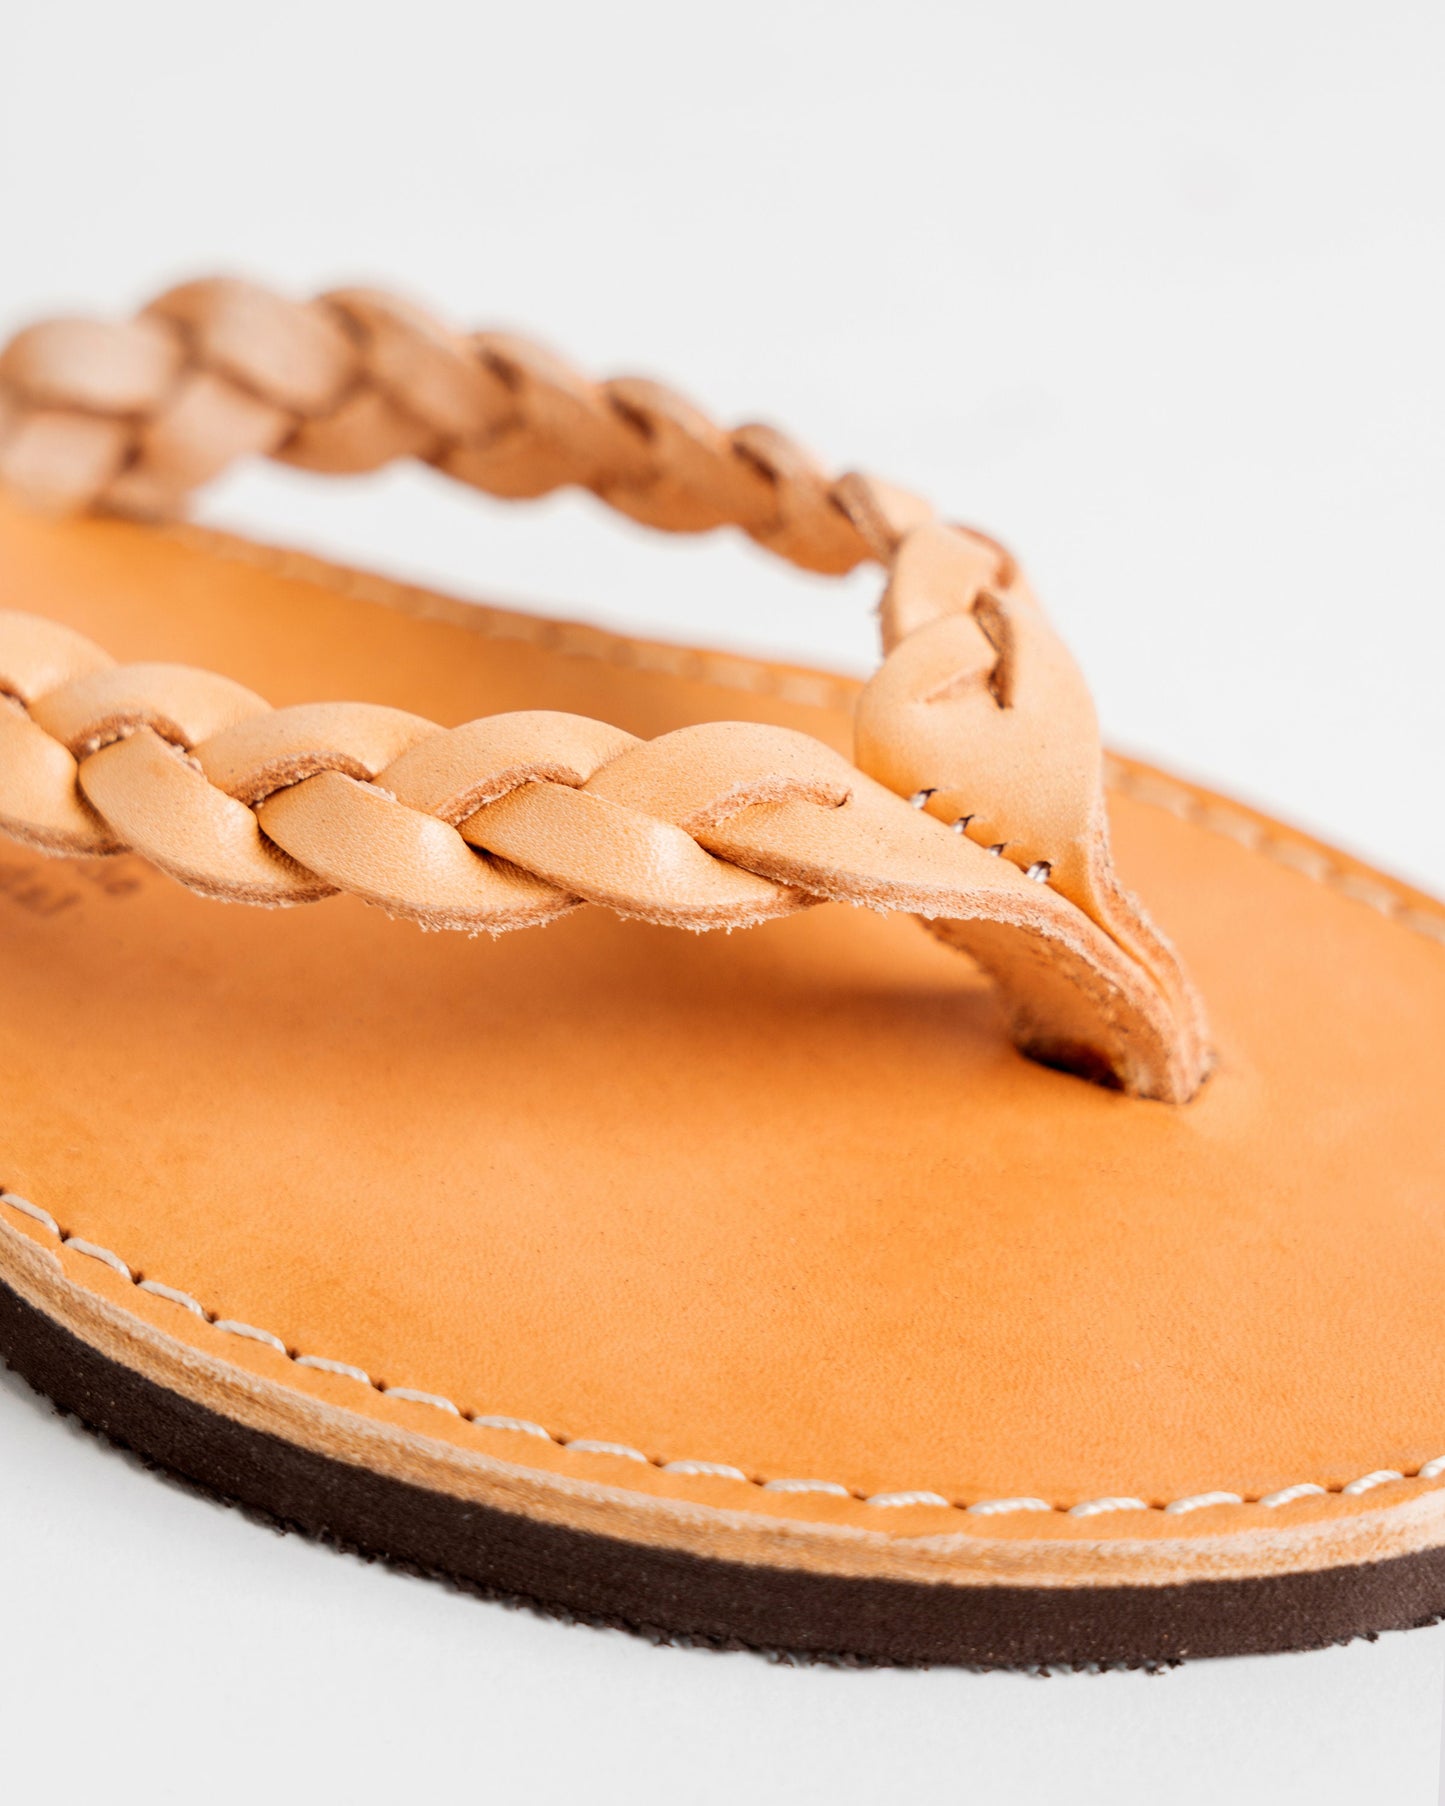 Natural leather flip flop sandals, Minimalist leather flats, Womens leather braided thong sandals